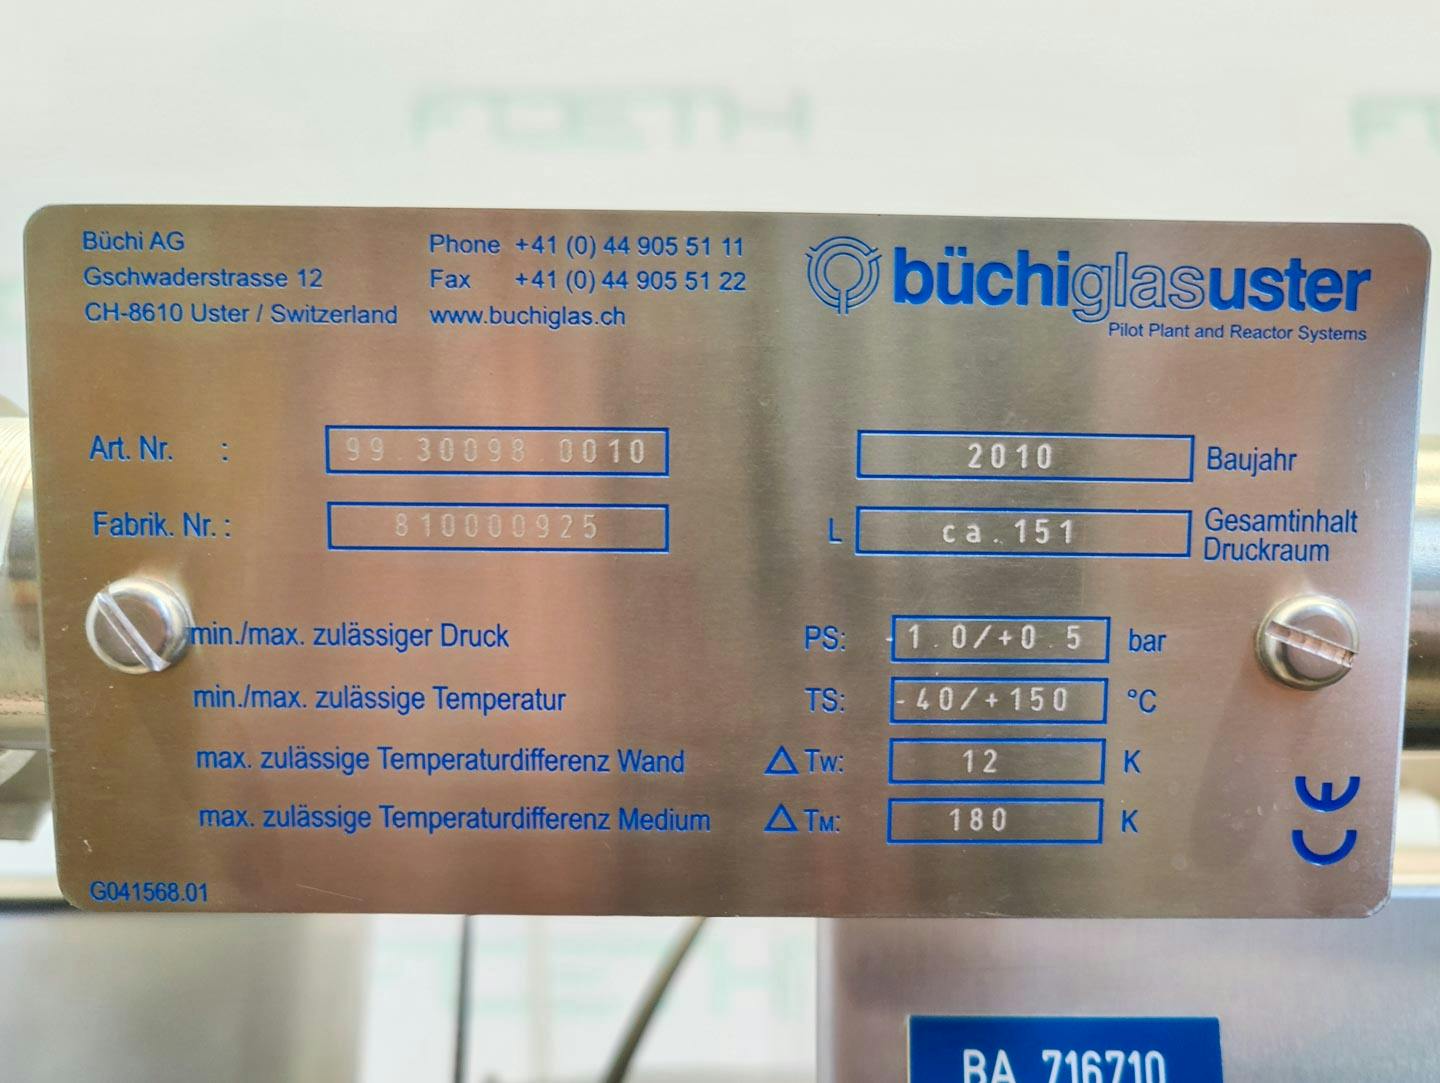 Büchi Filter 140 Ltr. (Ex) - filter reactor - Filtr nutsche - image 13